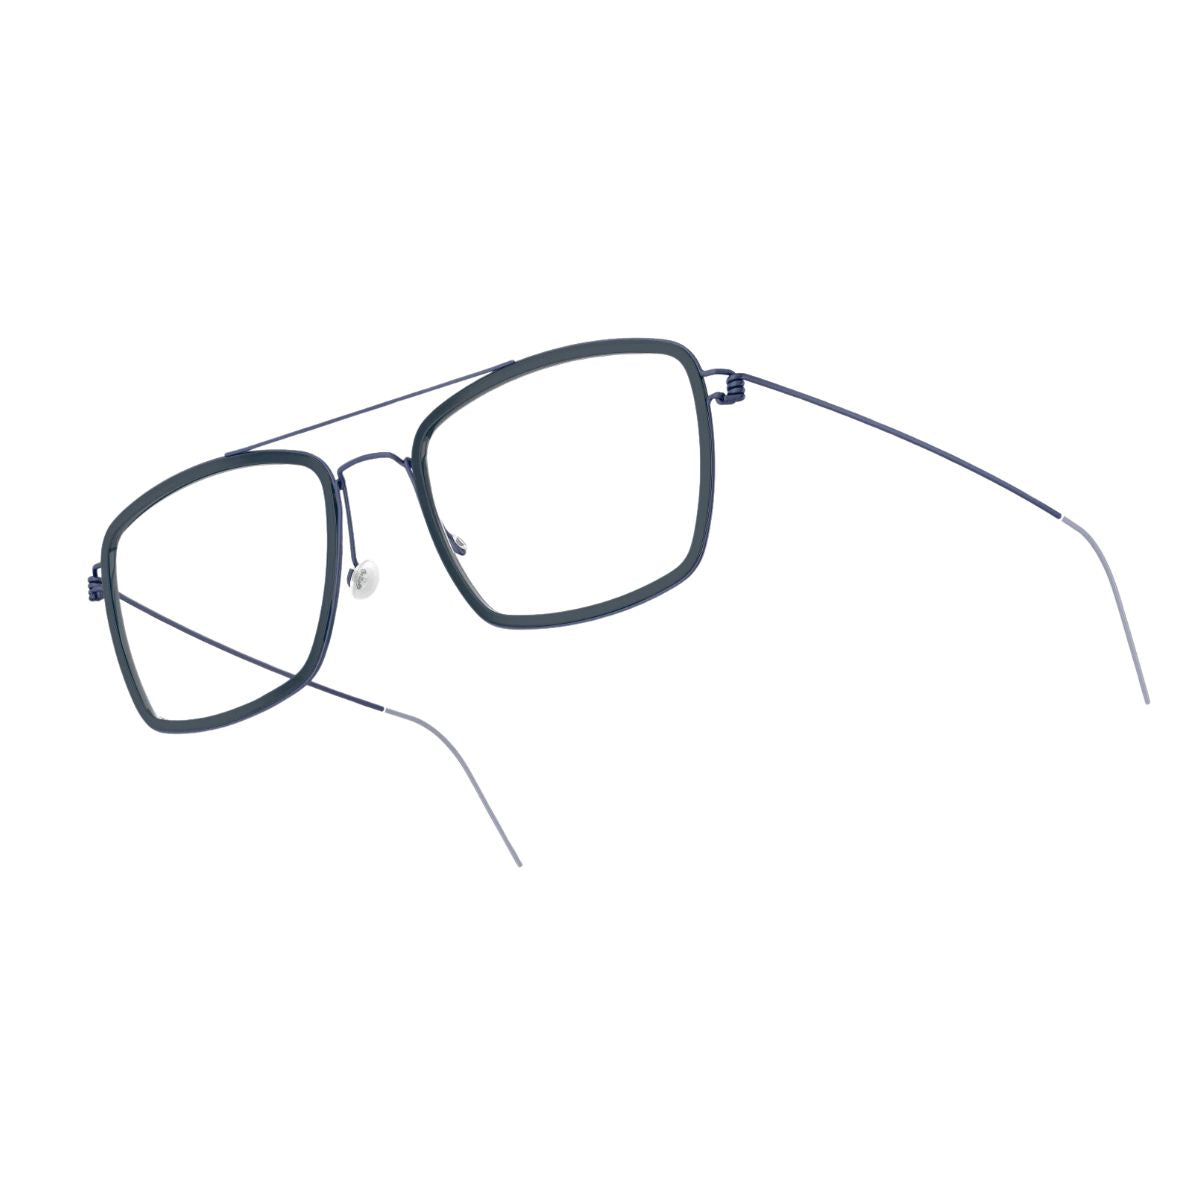 "Buy Latest Lindberg OSCAR Optical Glasses For Men & Women At Optorium"